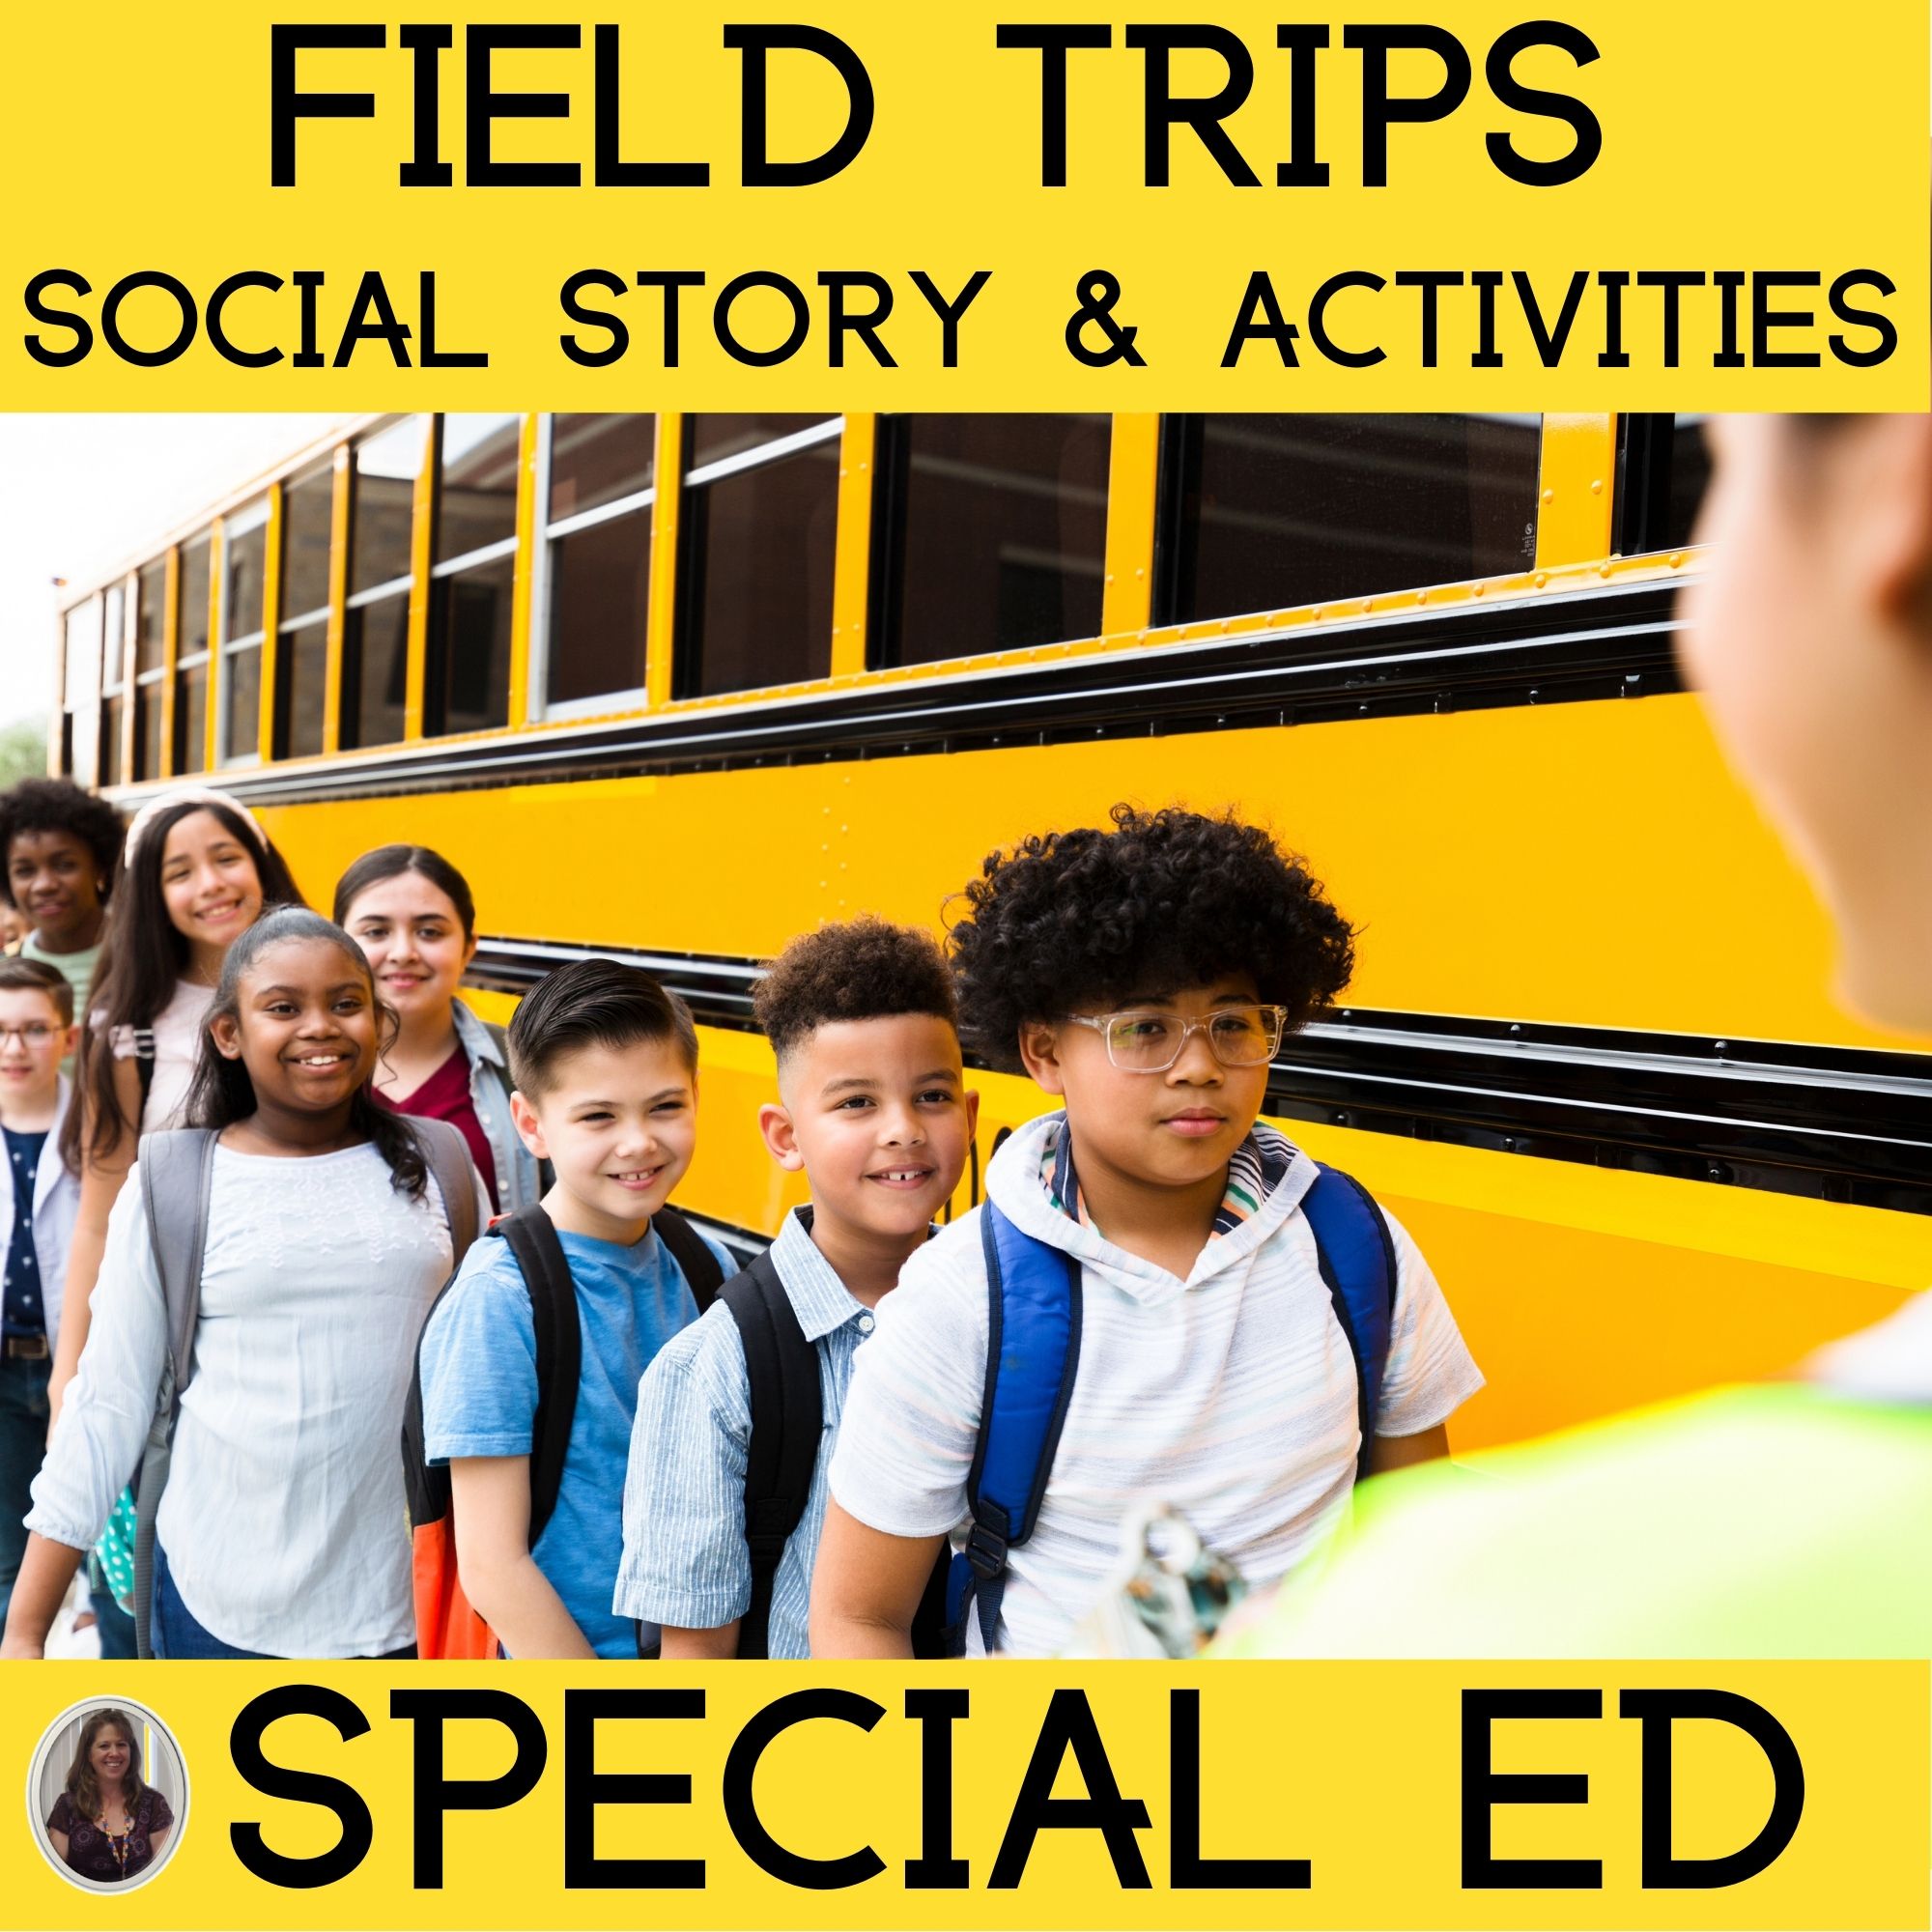 special needs field trip